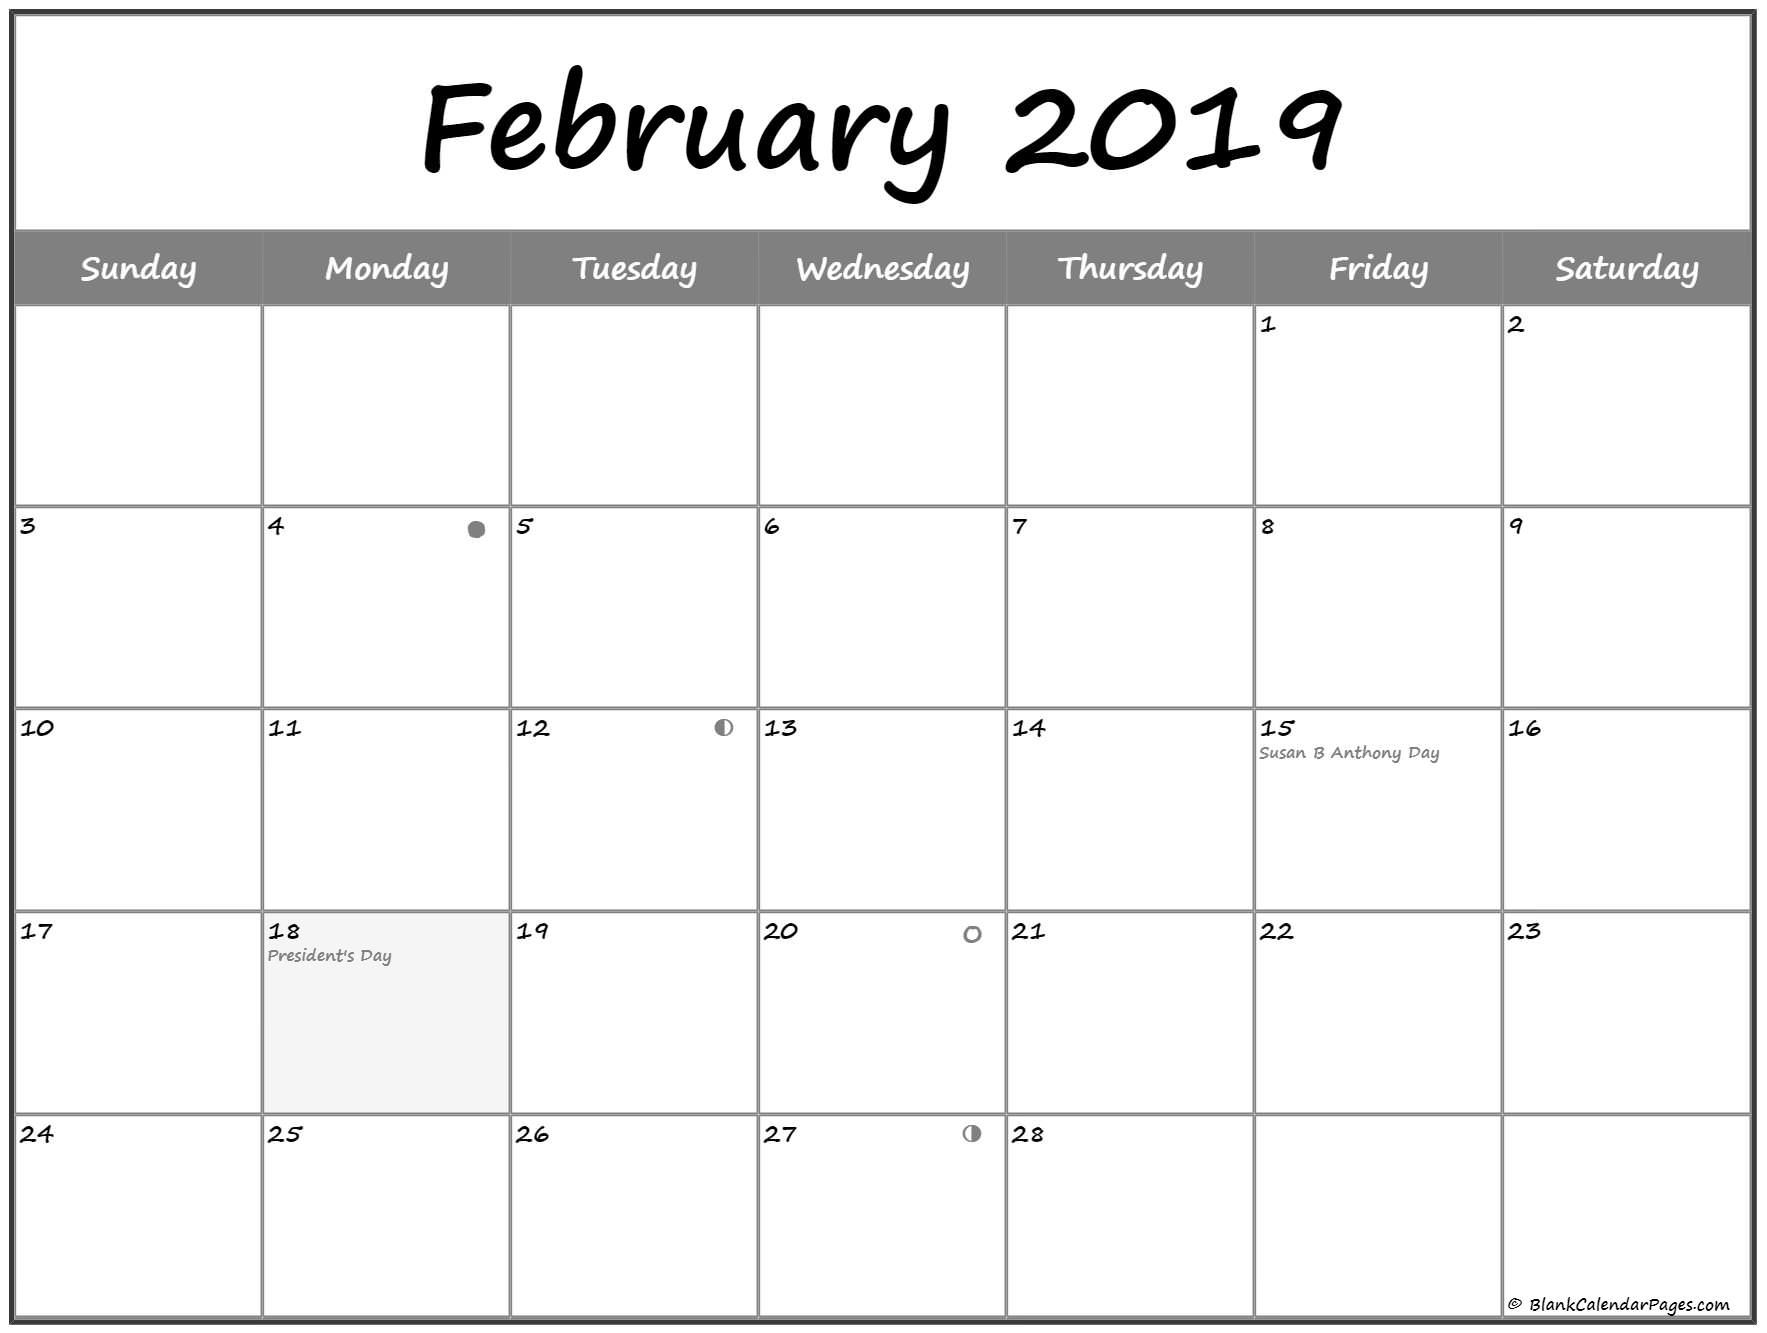 February 2019 Lunar Calendar. Moon Phase Calendar With Usa for Lunar Calendar October 2020